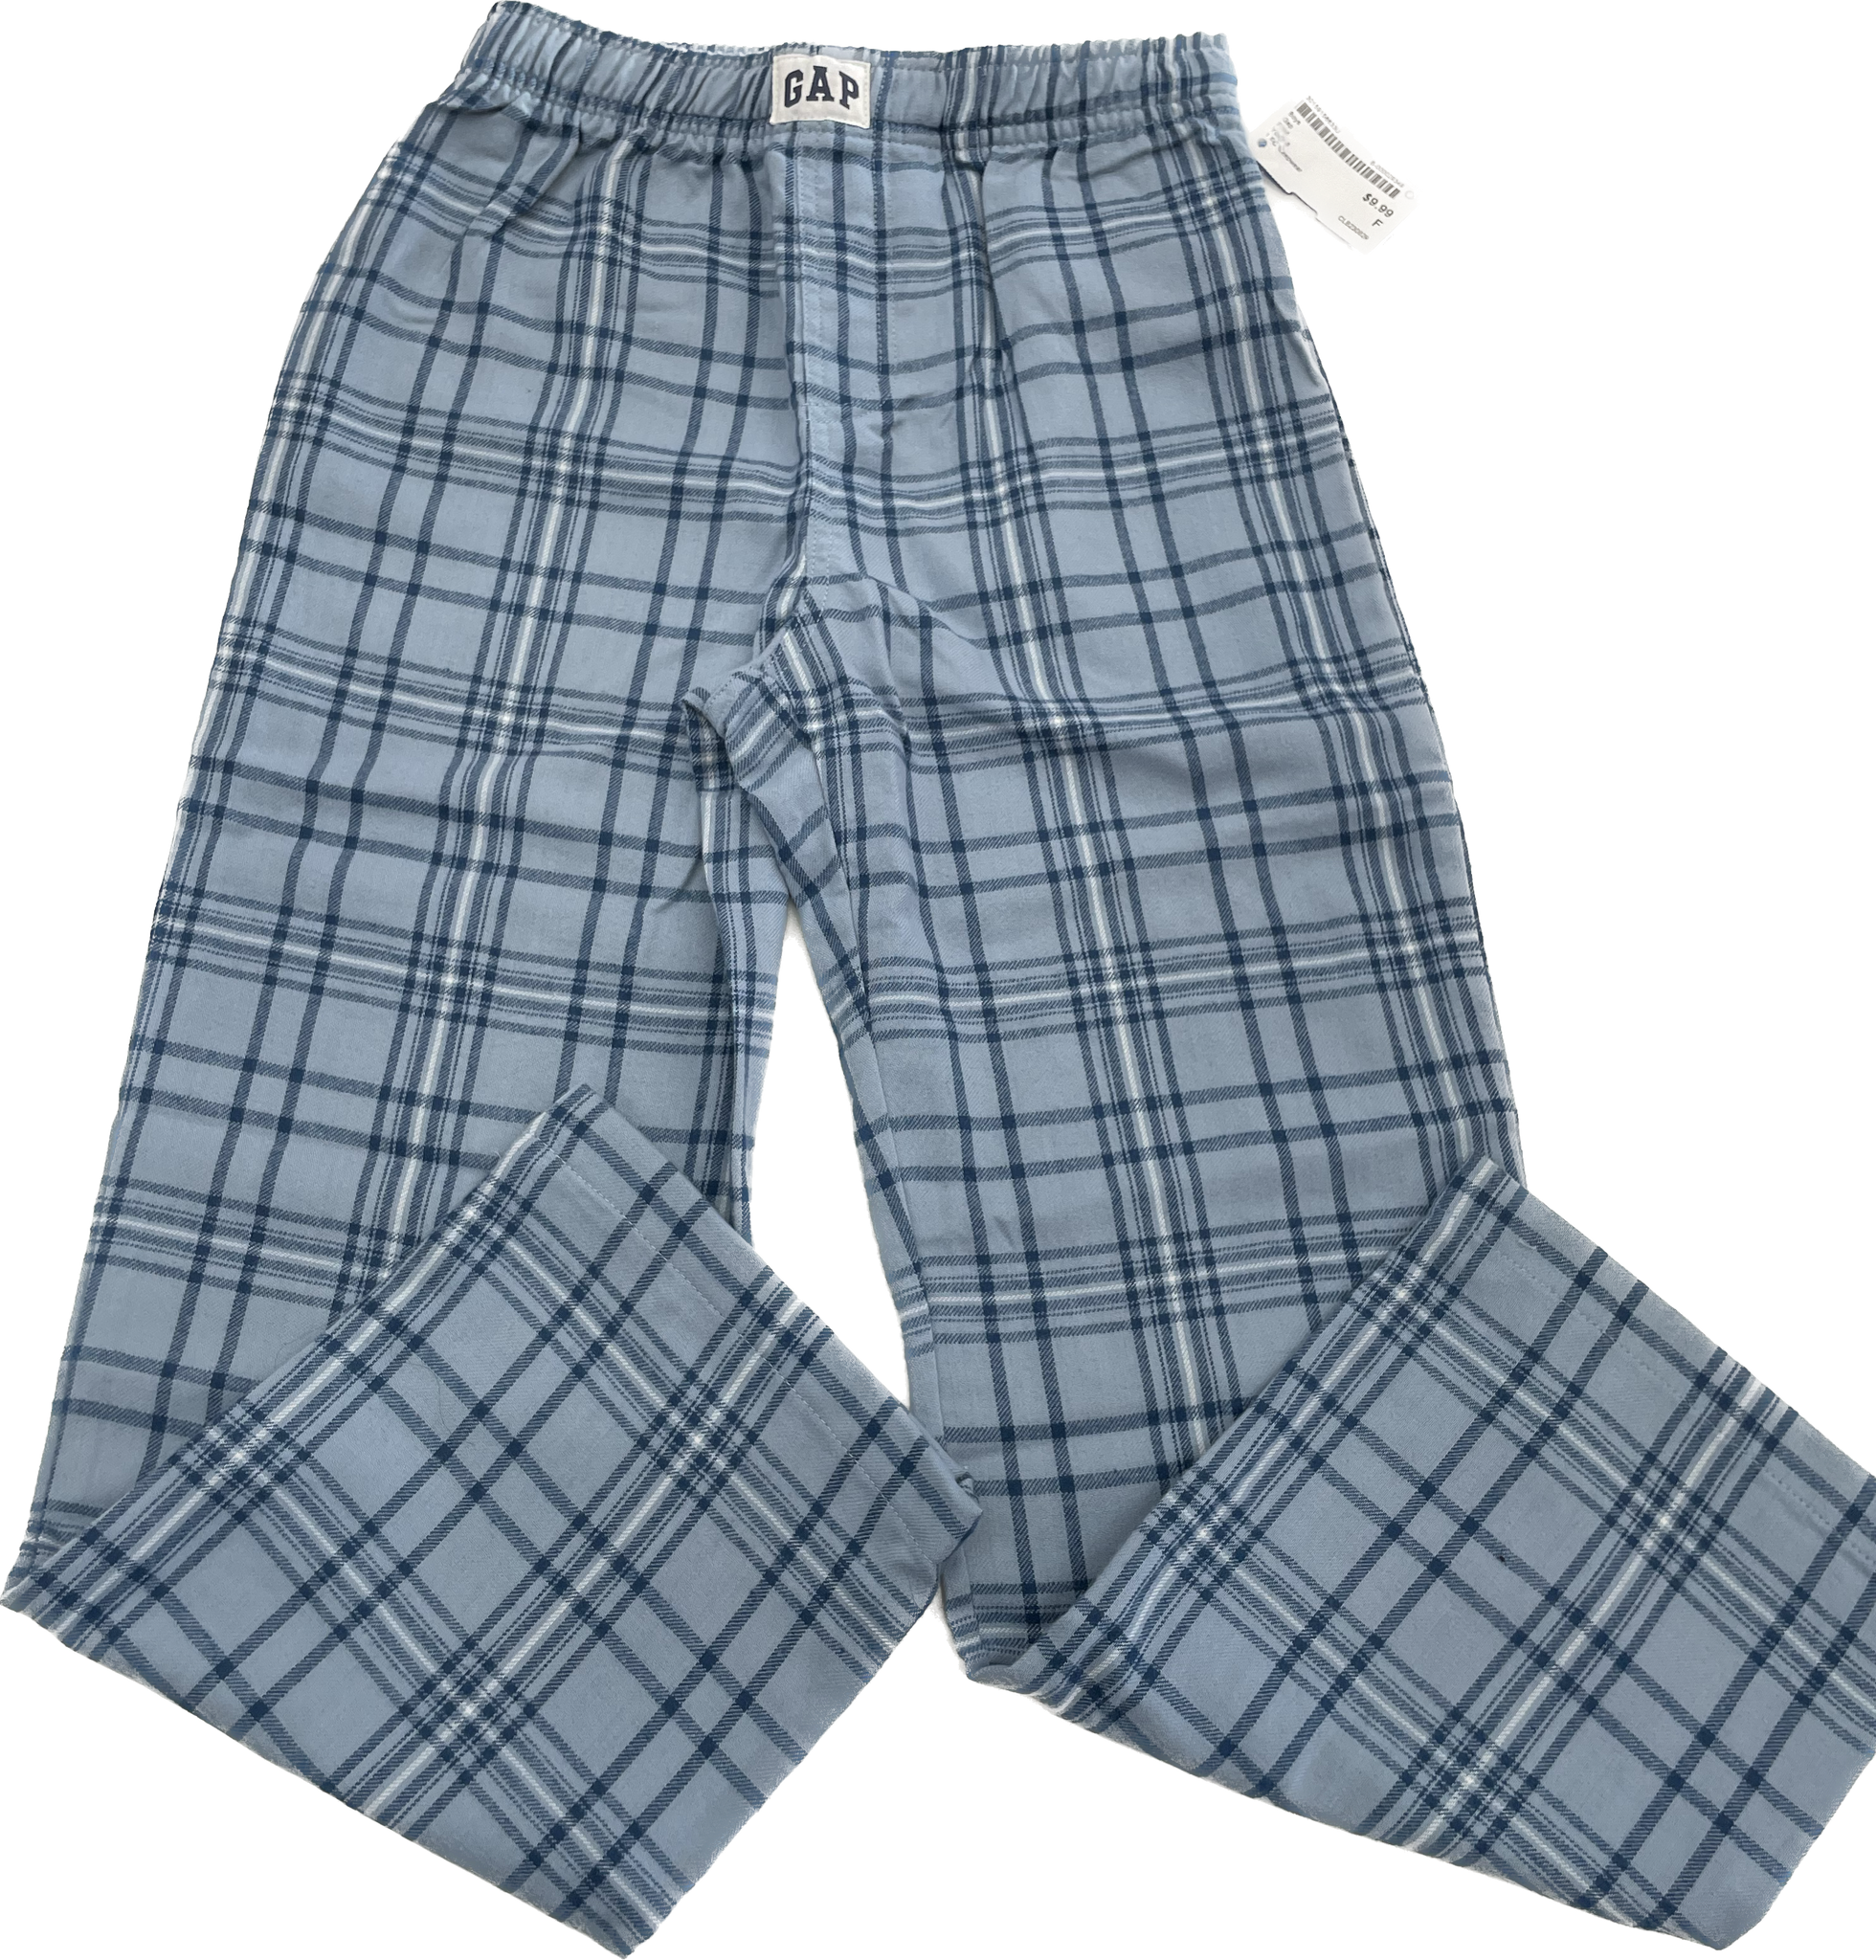 New Youth Boys Gap Kids Pajamas Pants 6